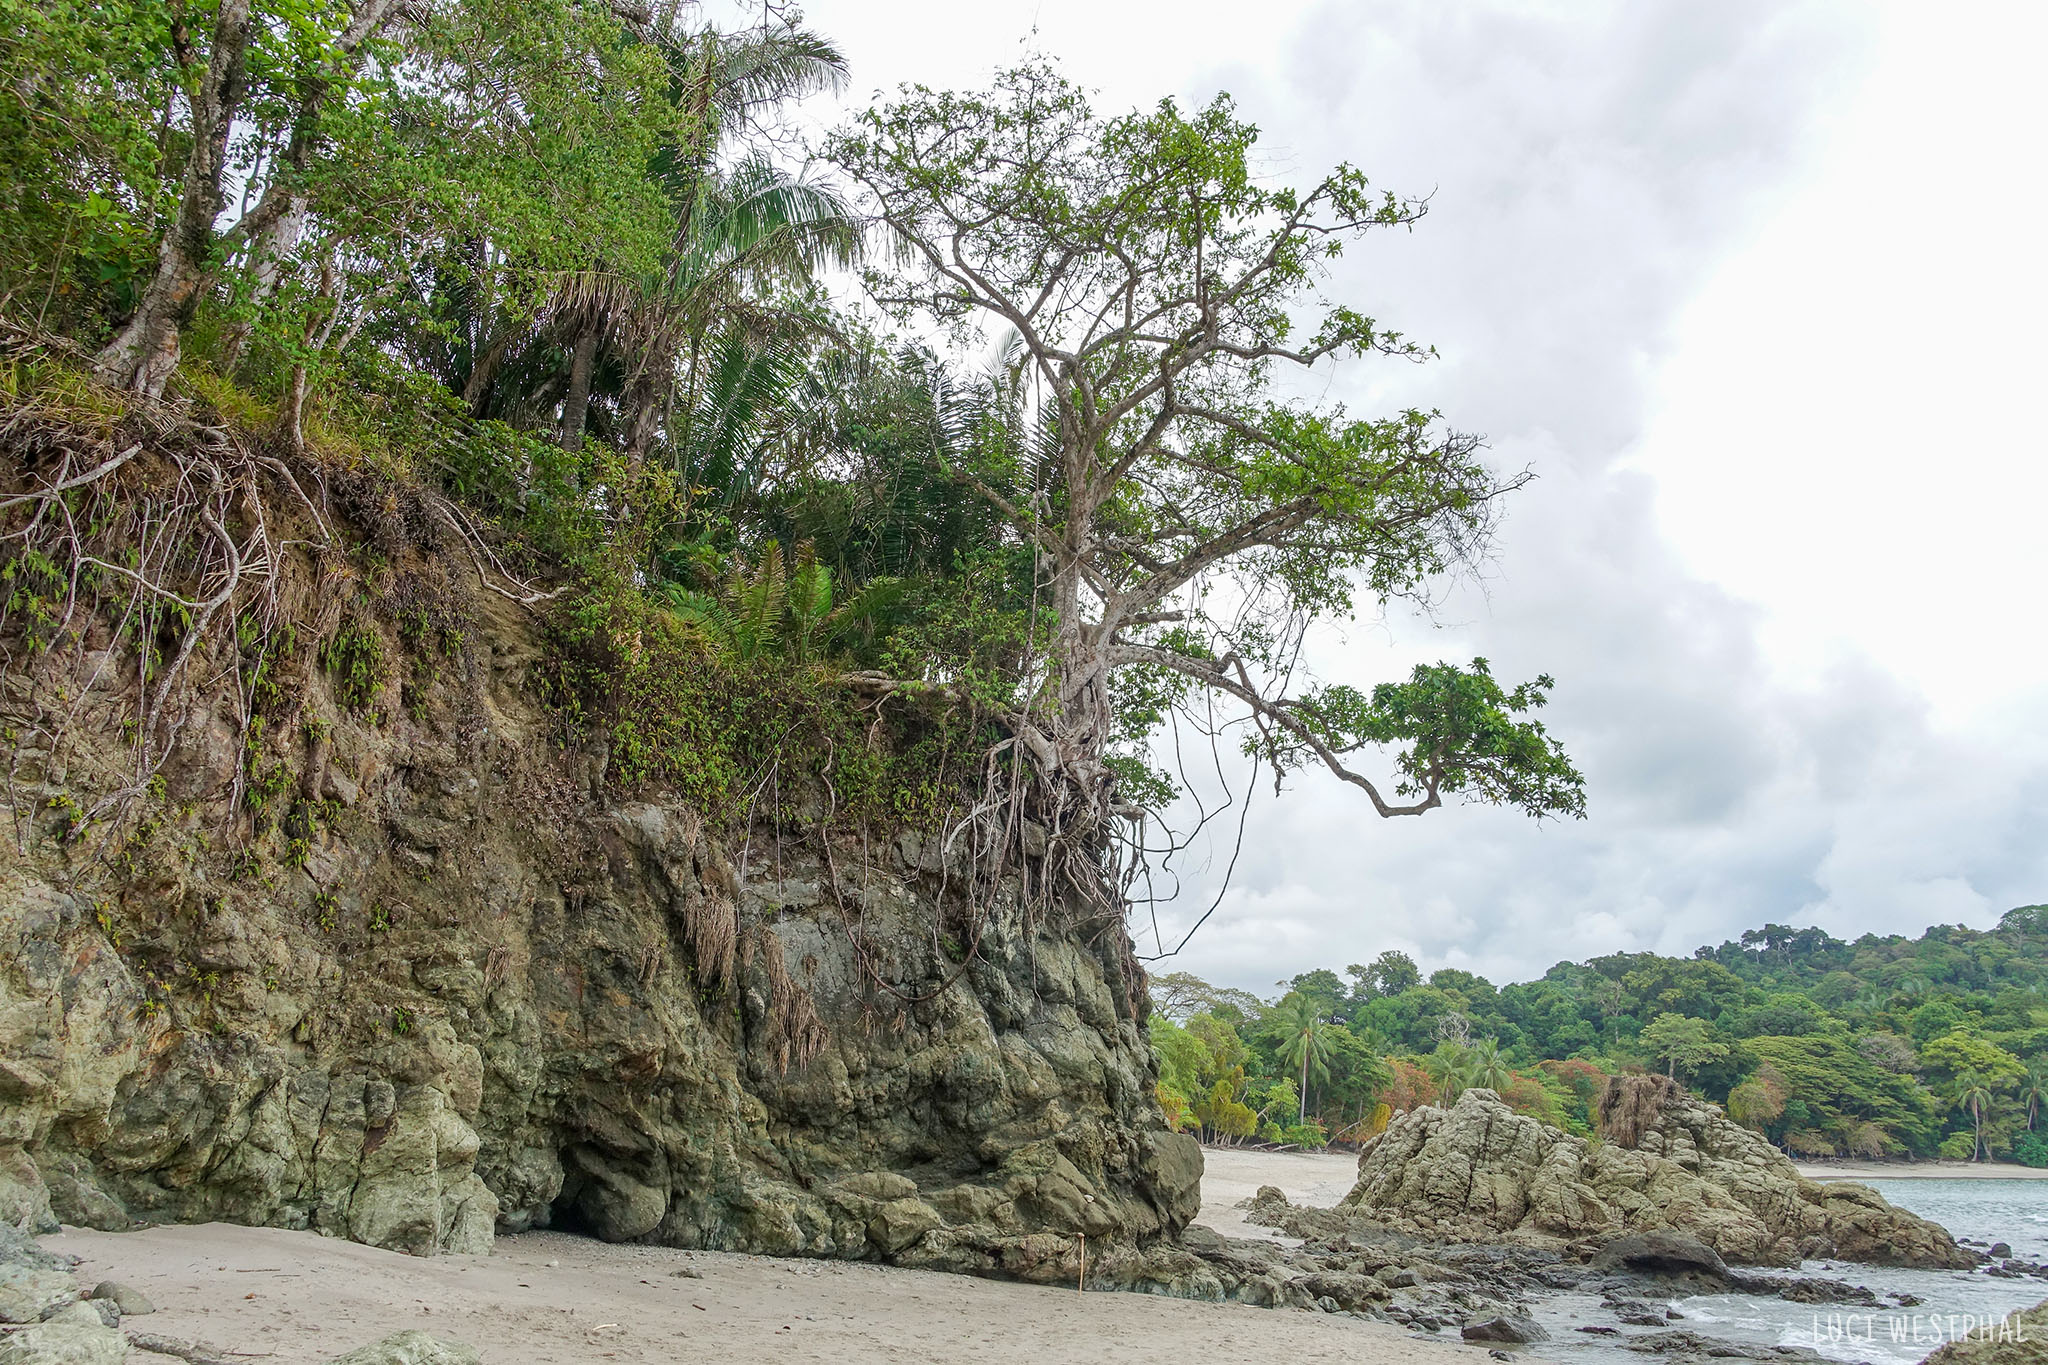 Tree roots holding on to rocks, Playa Manuel Antonio National Park, Costa Rica 